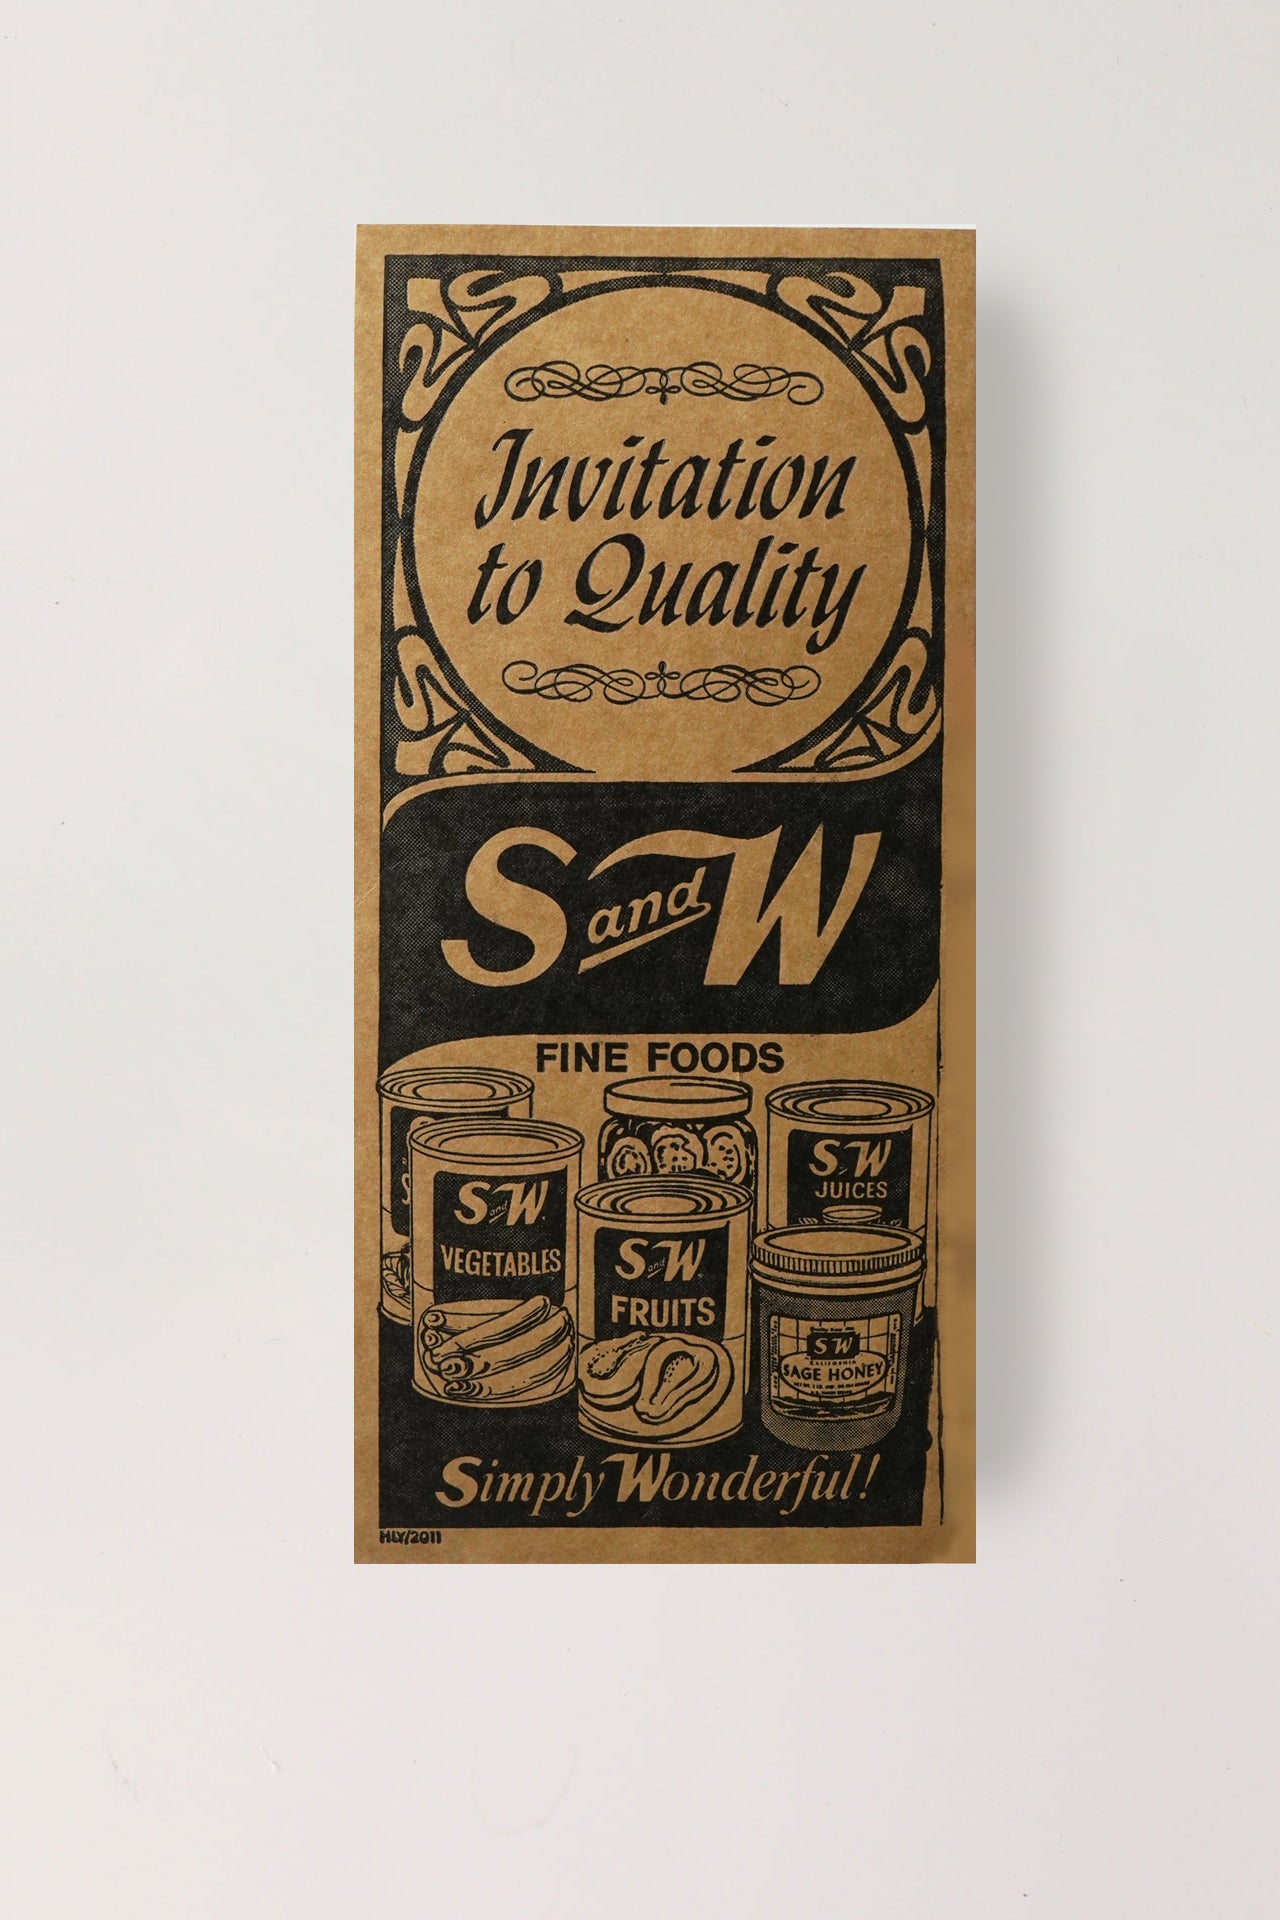 S&W Letterpress Print (Invitation to Quality)